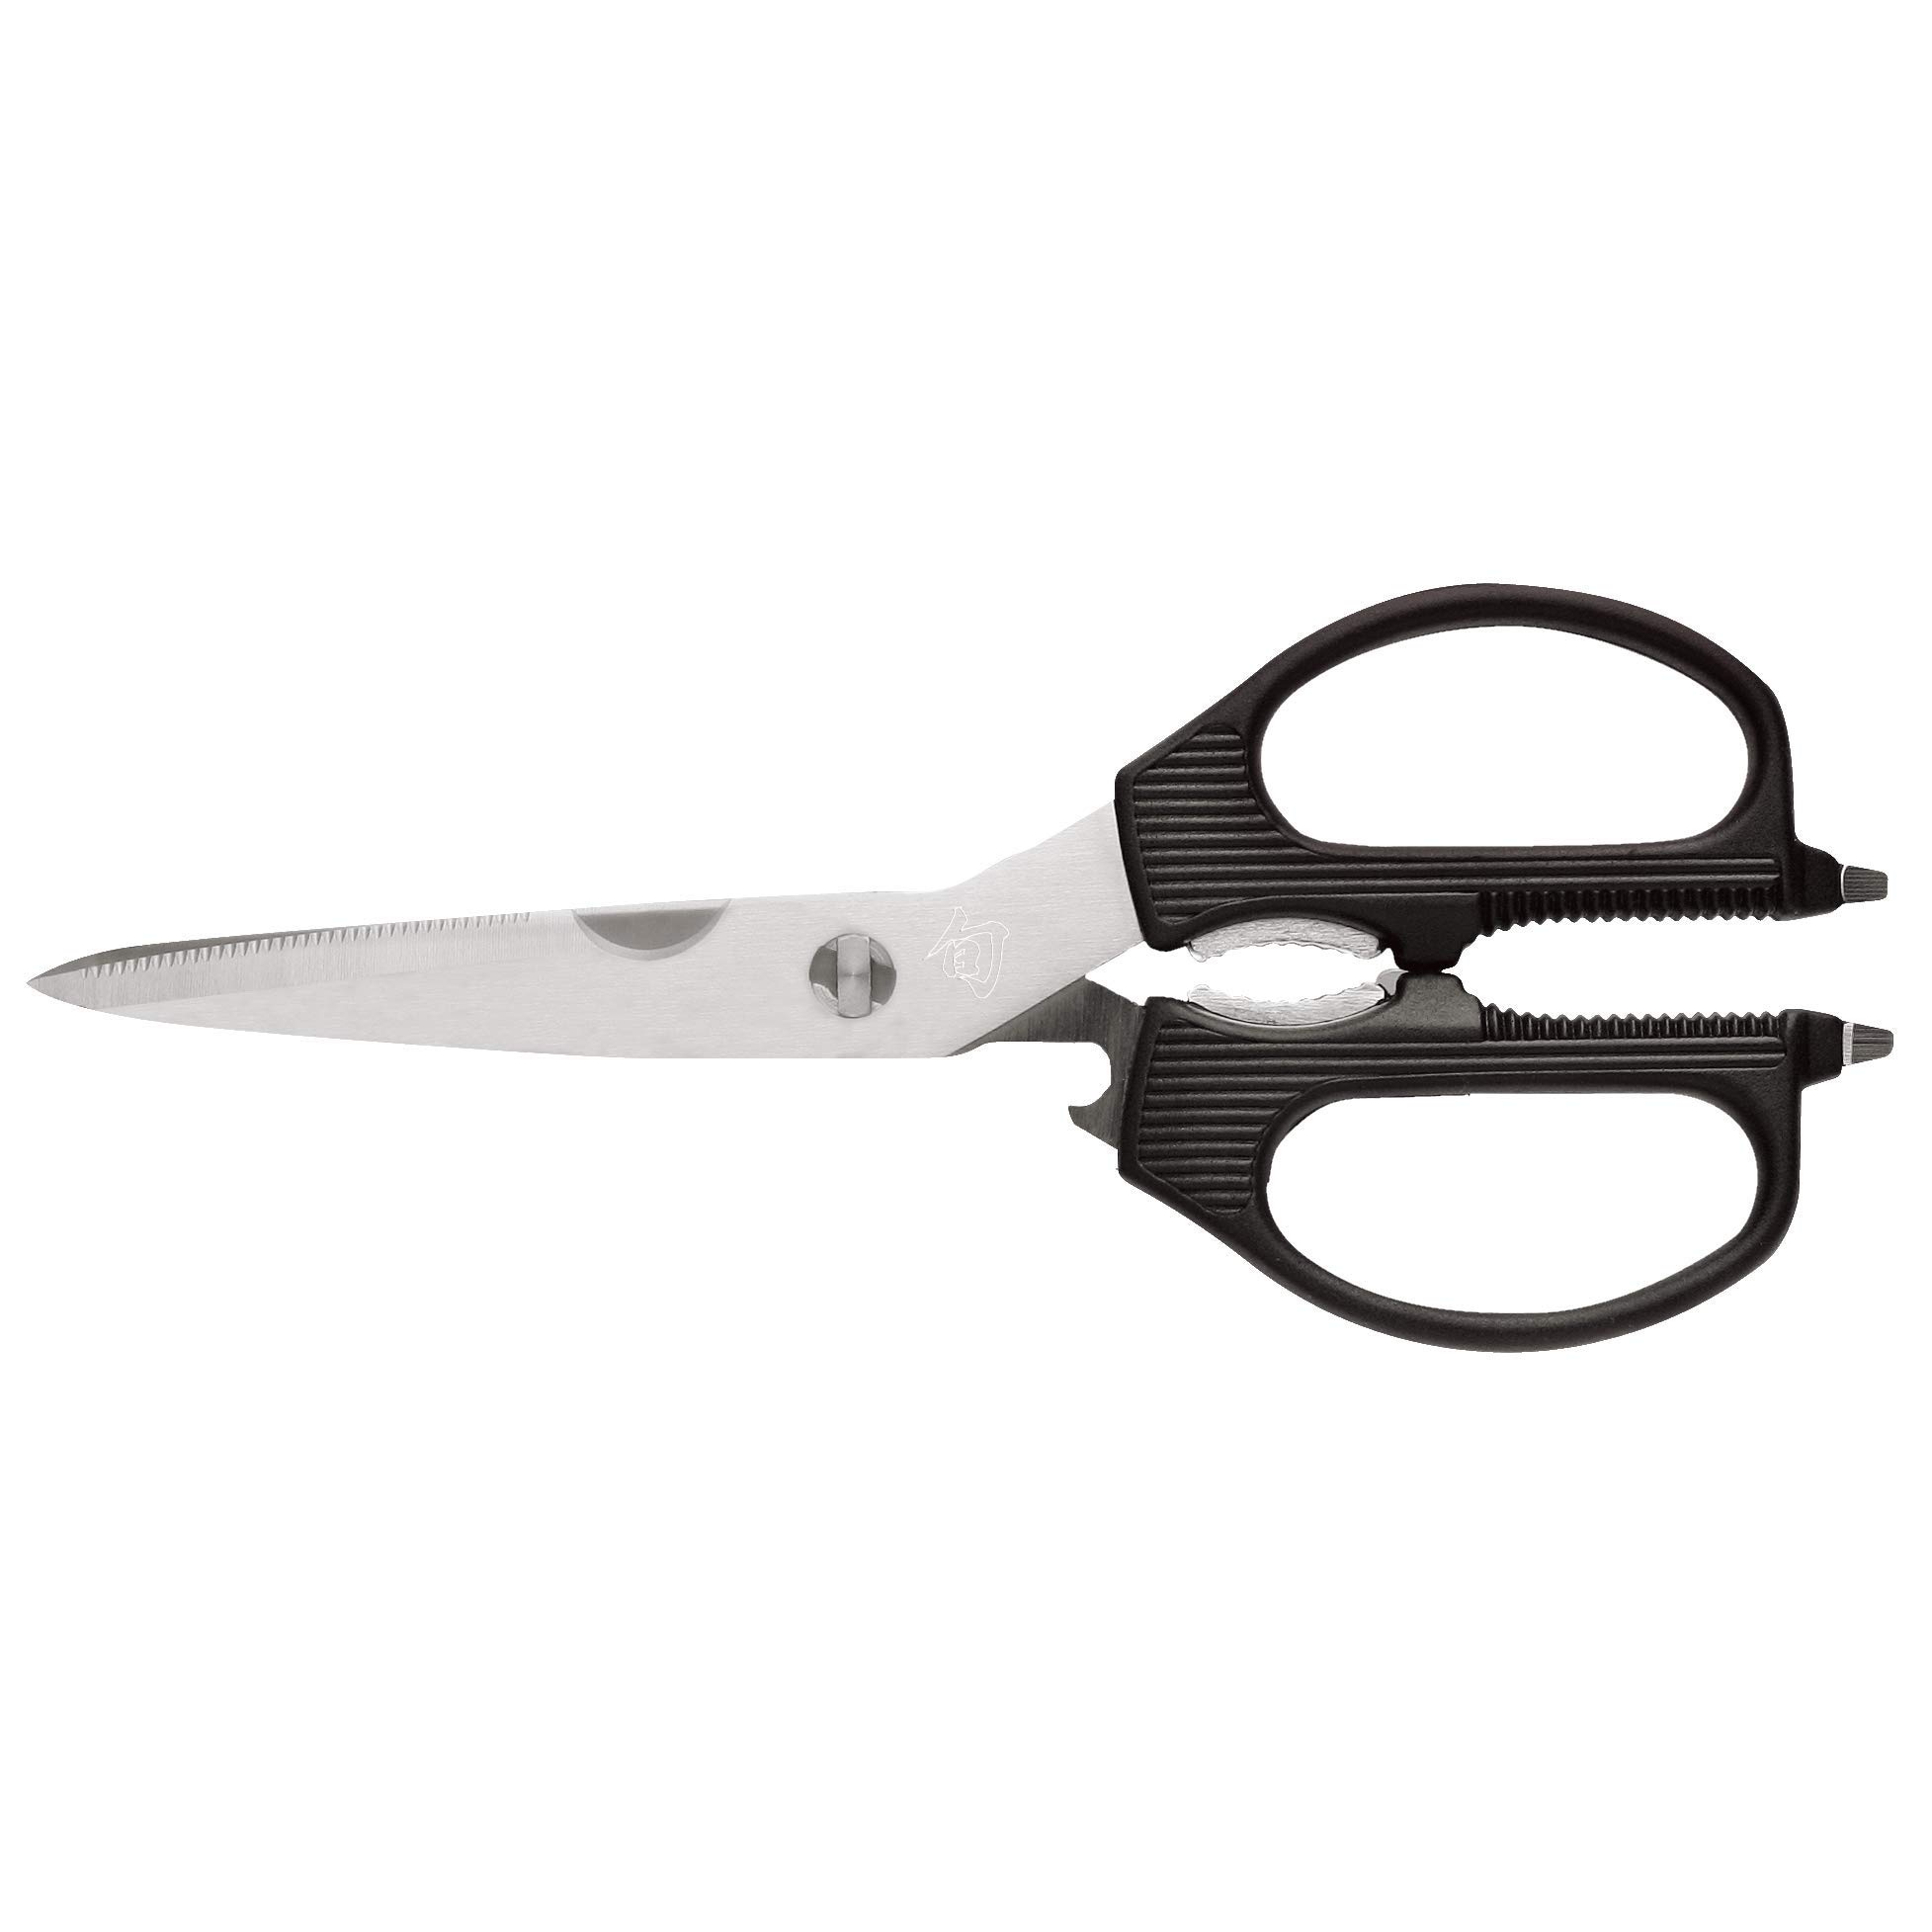 Shun Multi Purpose Shears, Stainless Steel Kitchen Scissors, Dm7300, Black, 3.5 Inch Blade